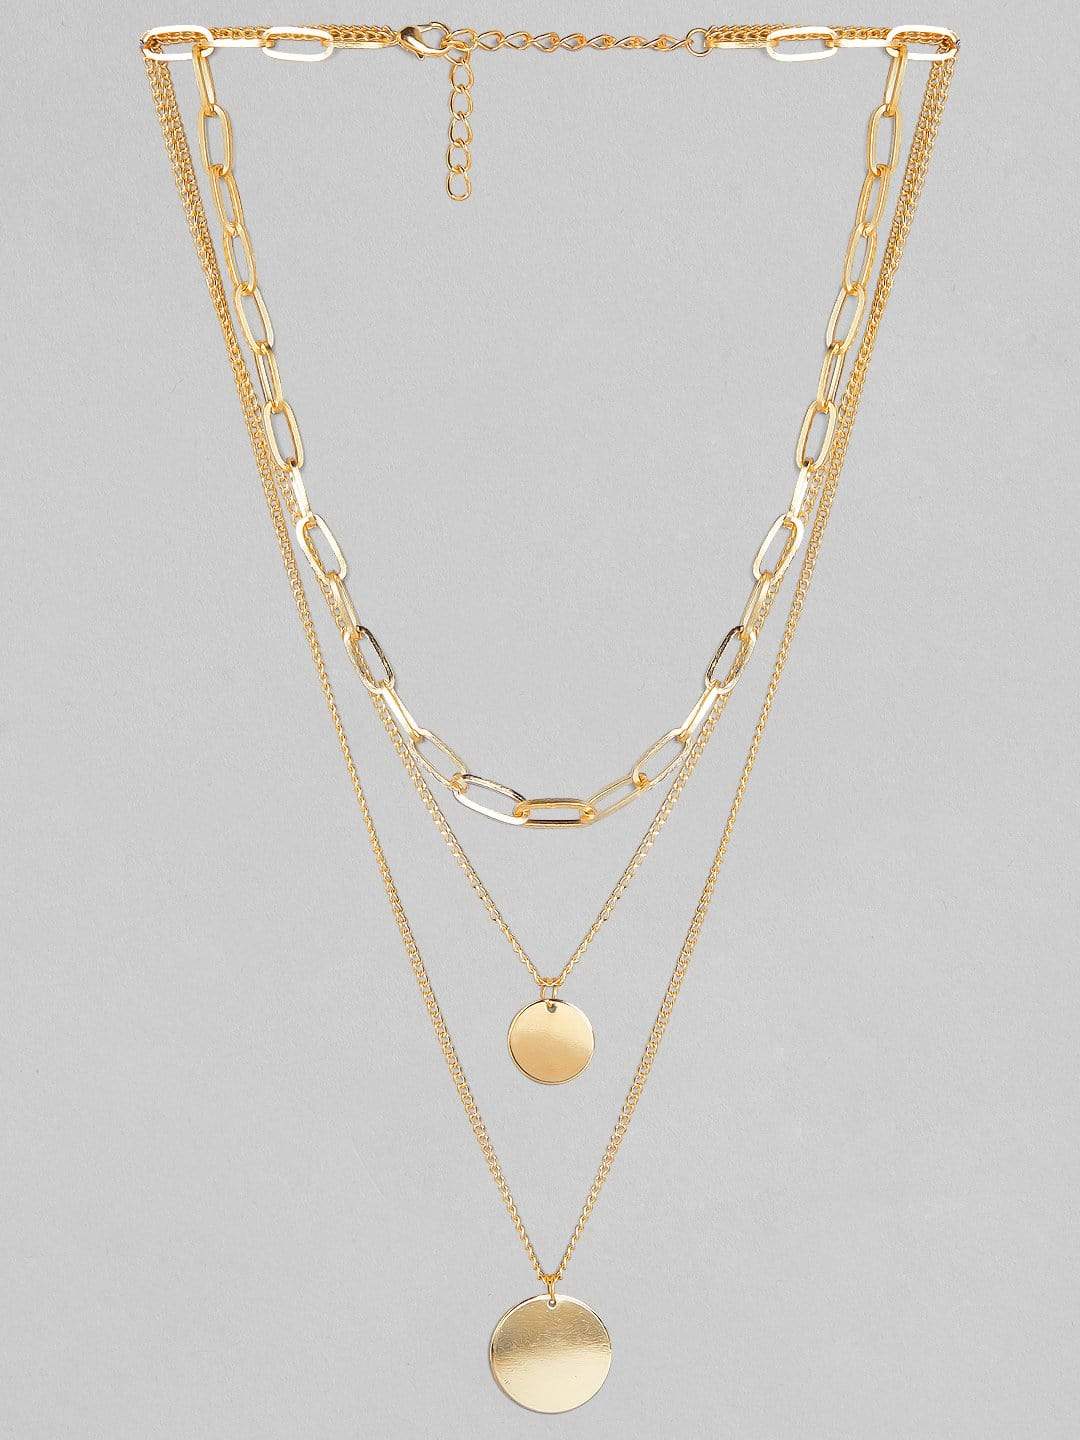 Tiffany 1837® Interlocking Circles Pendant in Yellow Gold, Small | Tiffany  & Co.